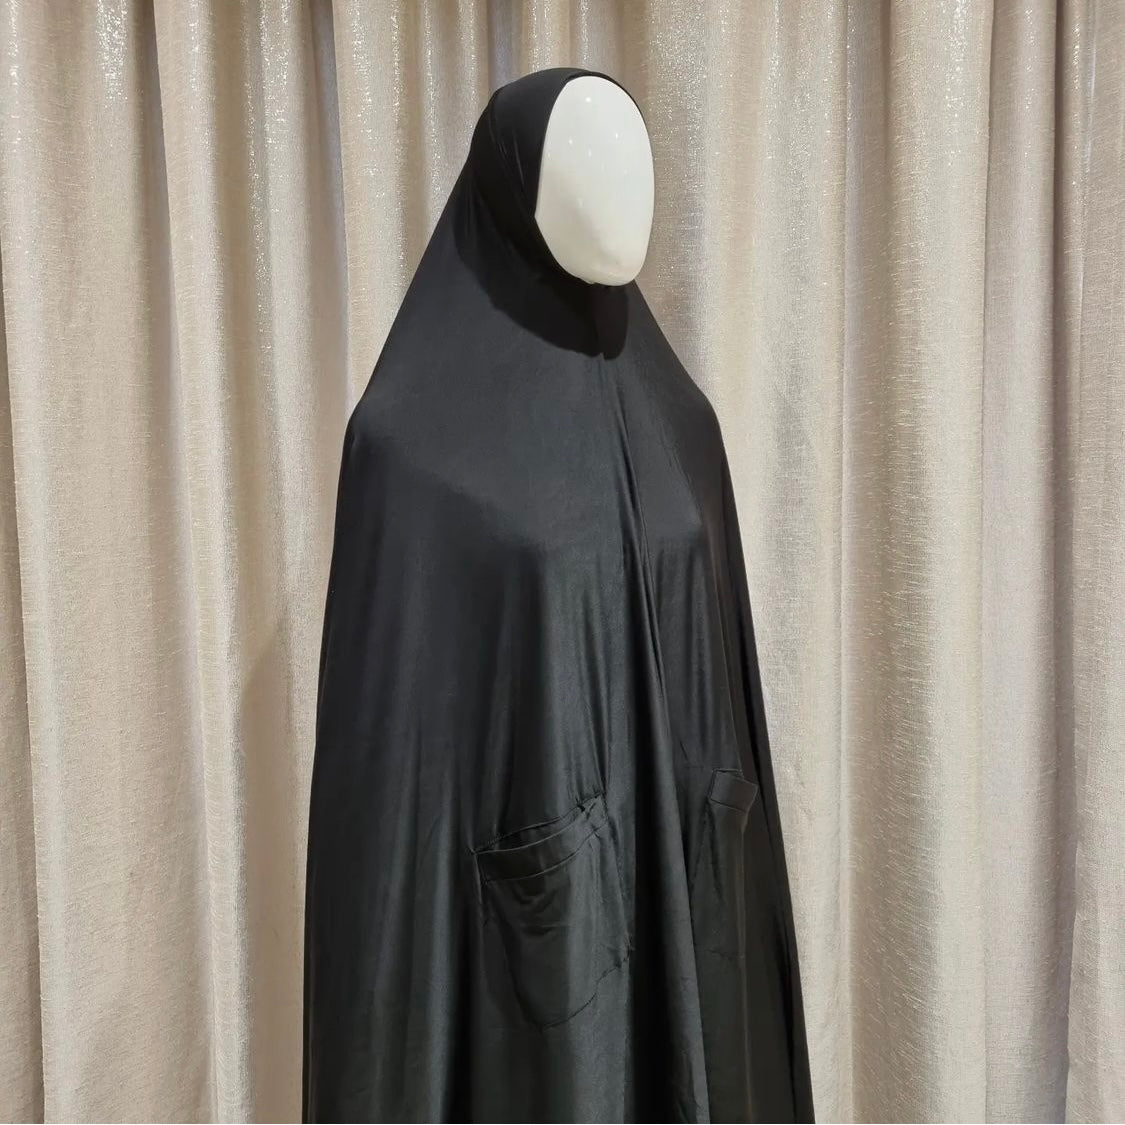 Ladies Burqa with Pockets